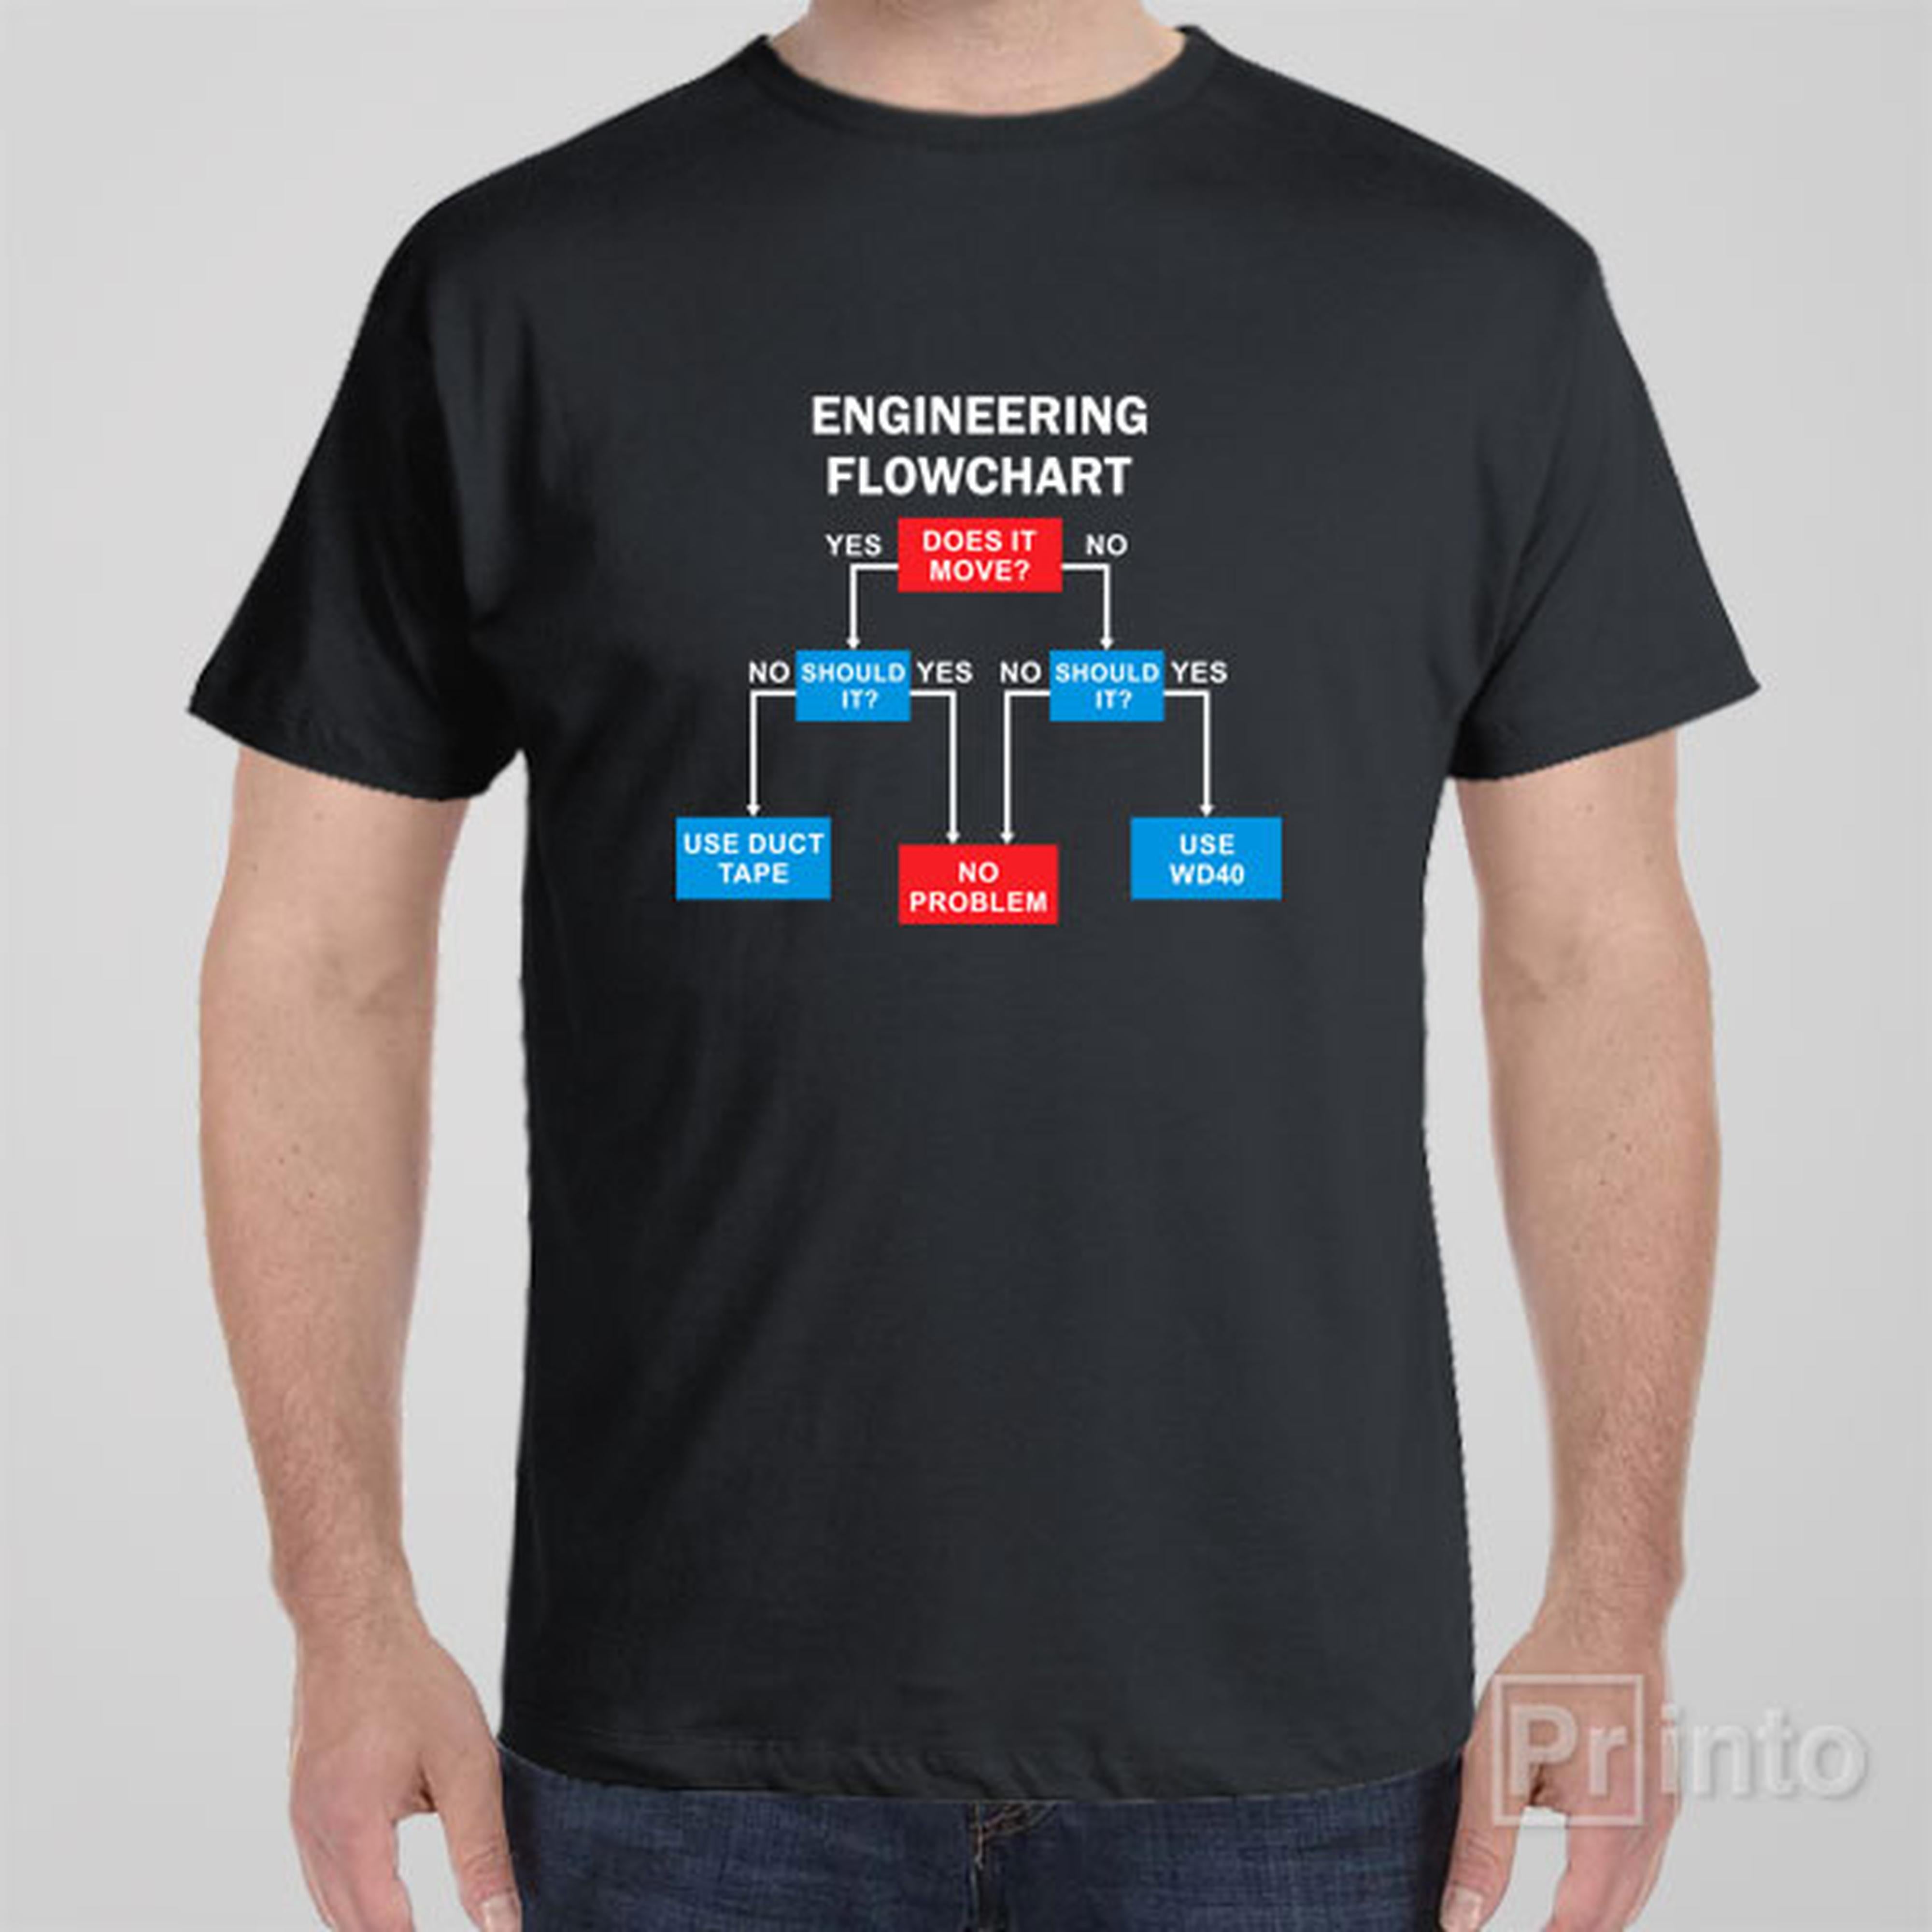 engineering-flowchart-t-shirt